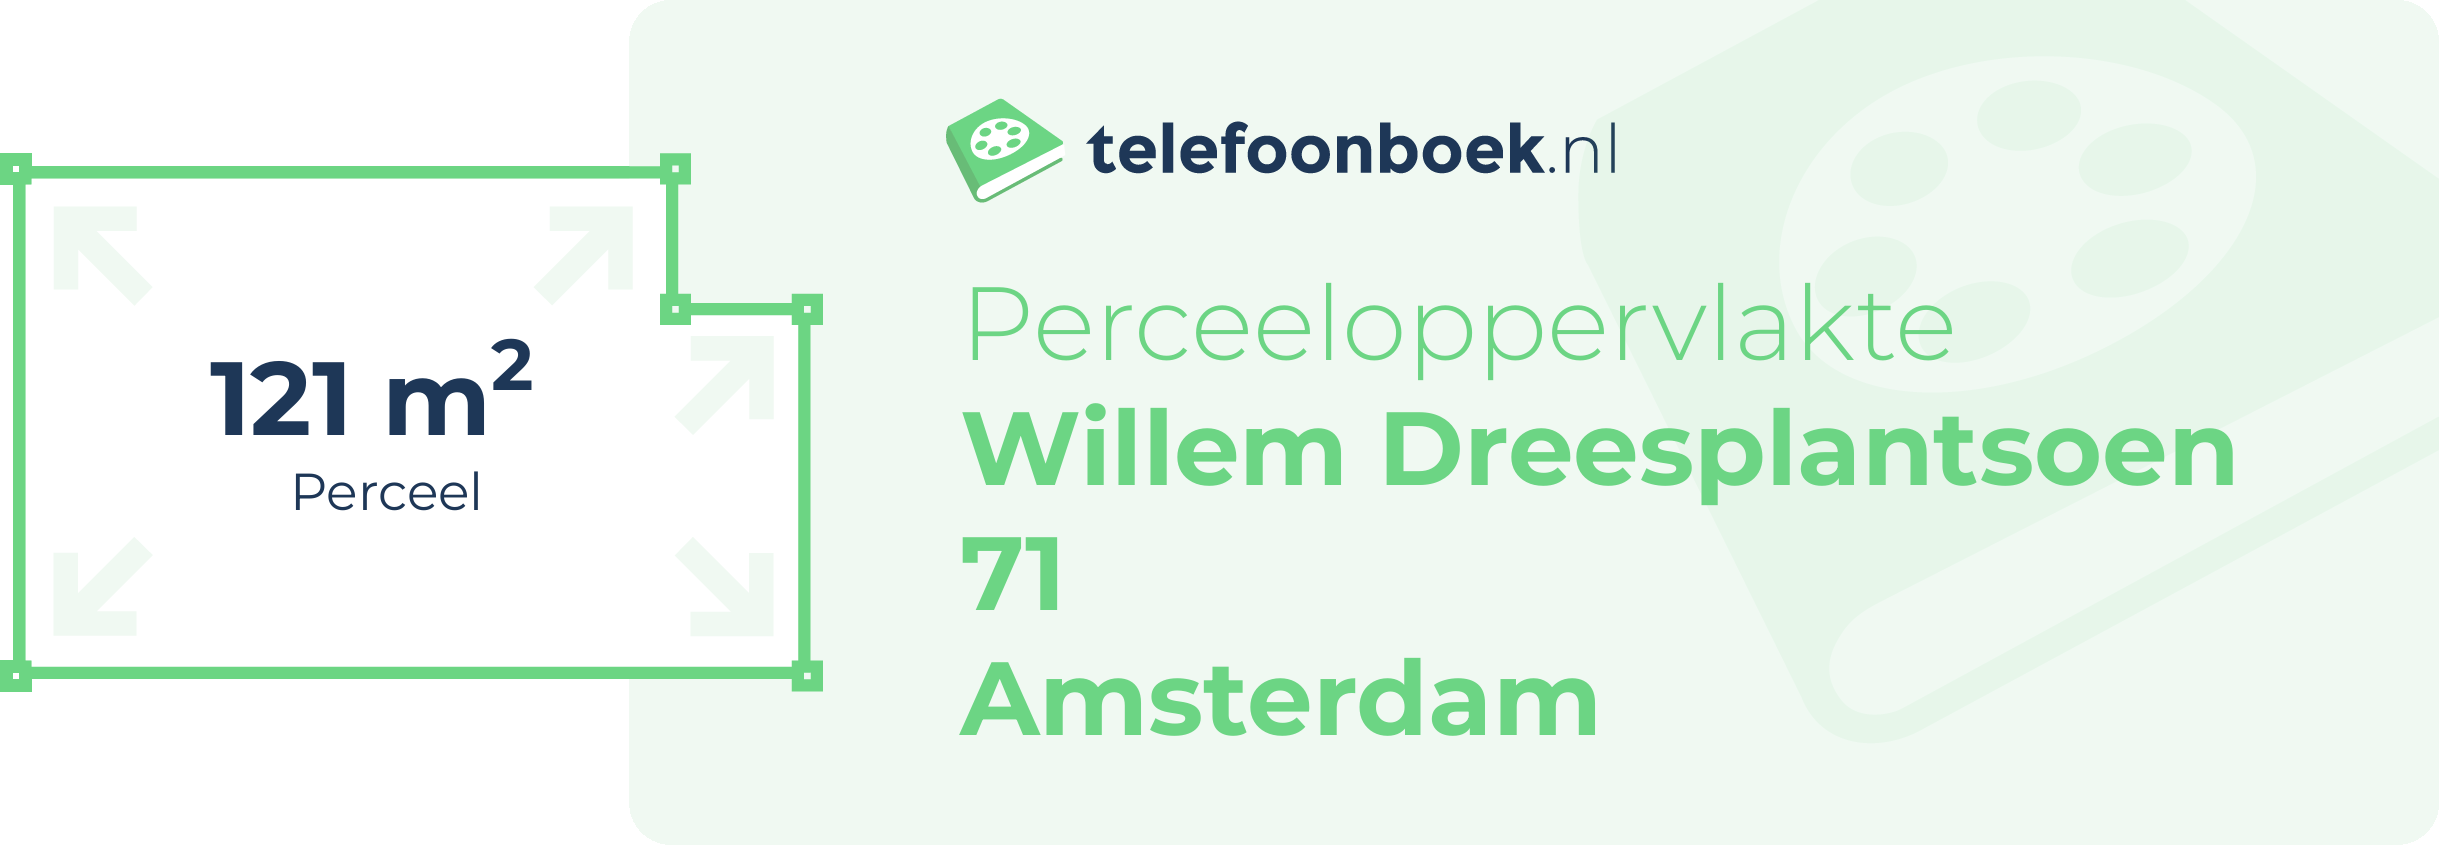 Perceeloppervlakte Willem Dreesplantsoen 71 Amsterdam